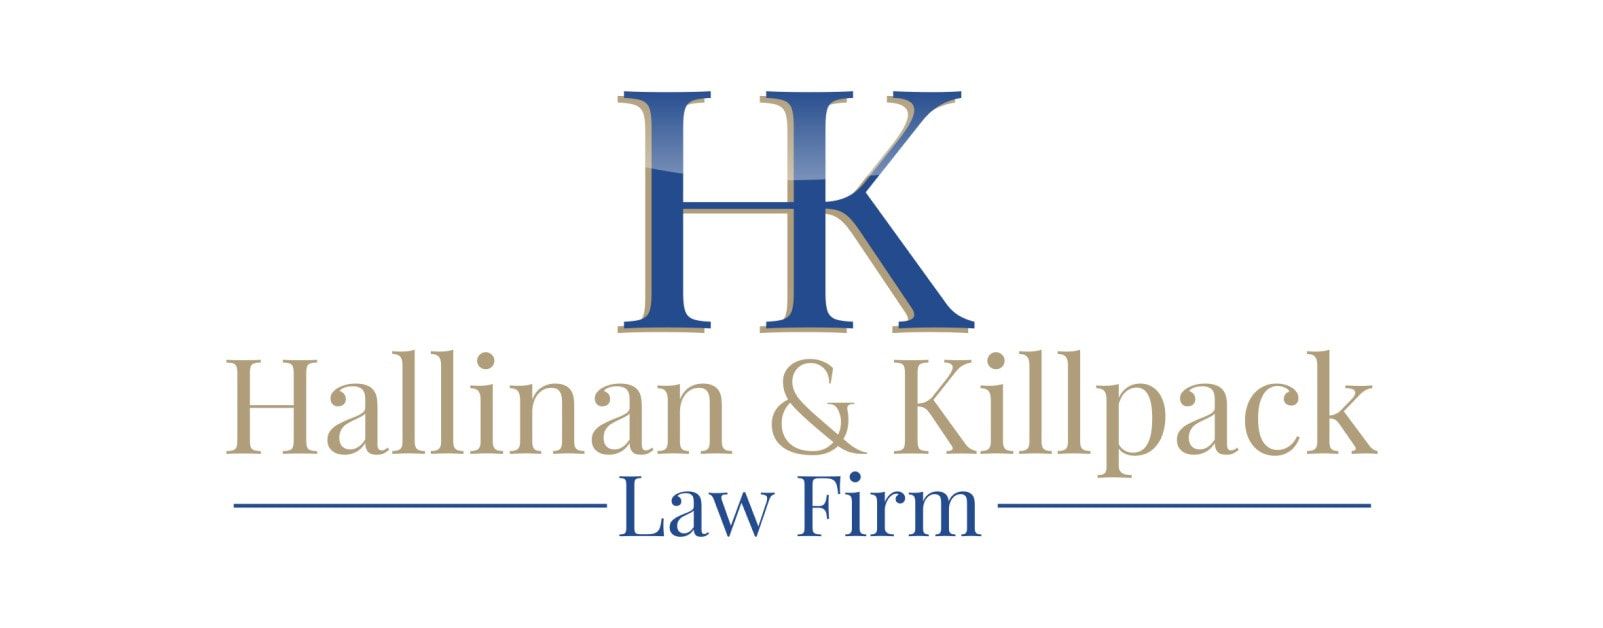 Hallinan & Killpack law firm logo